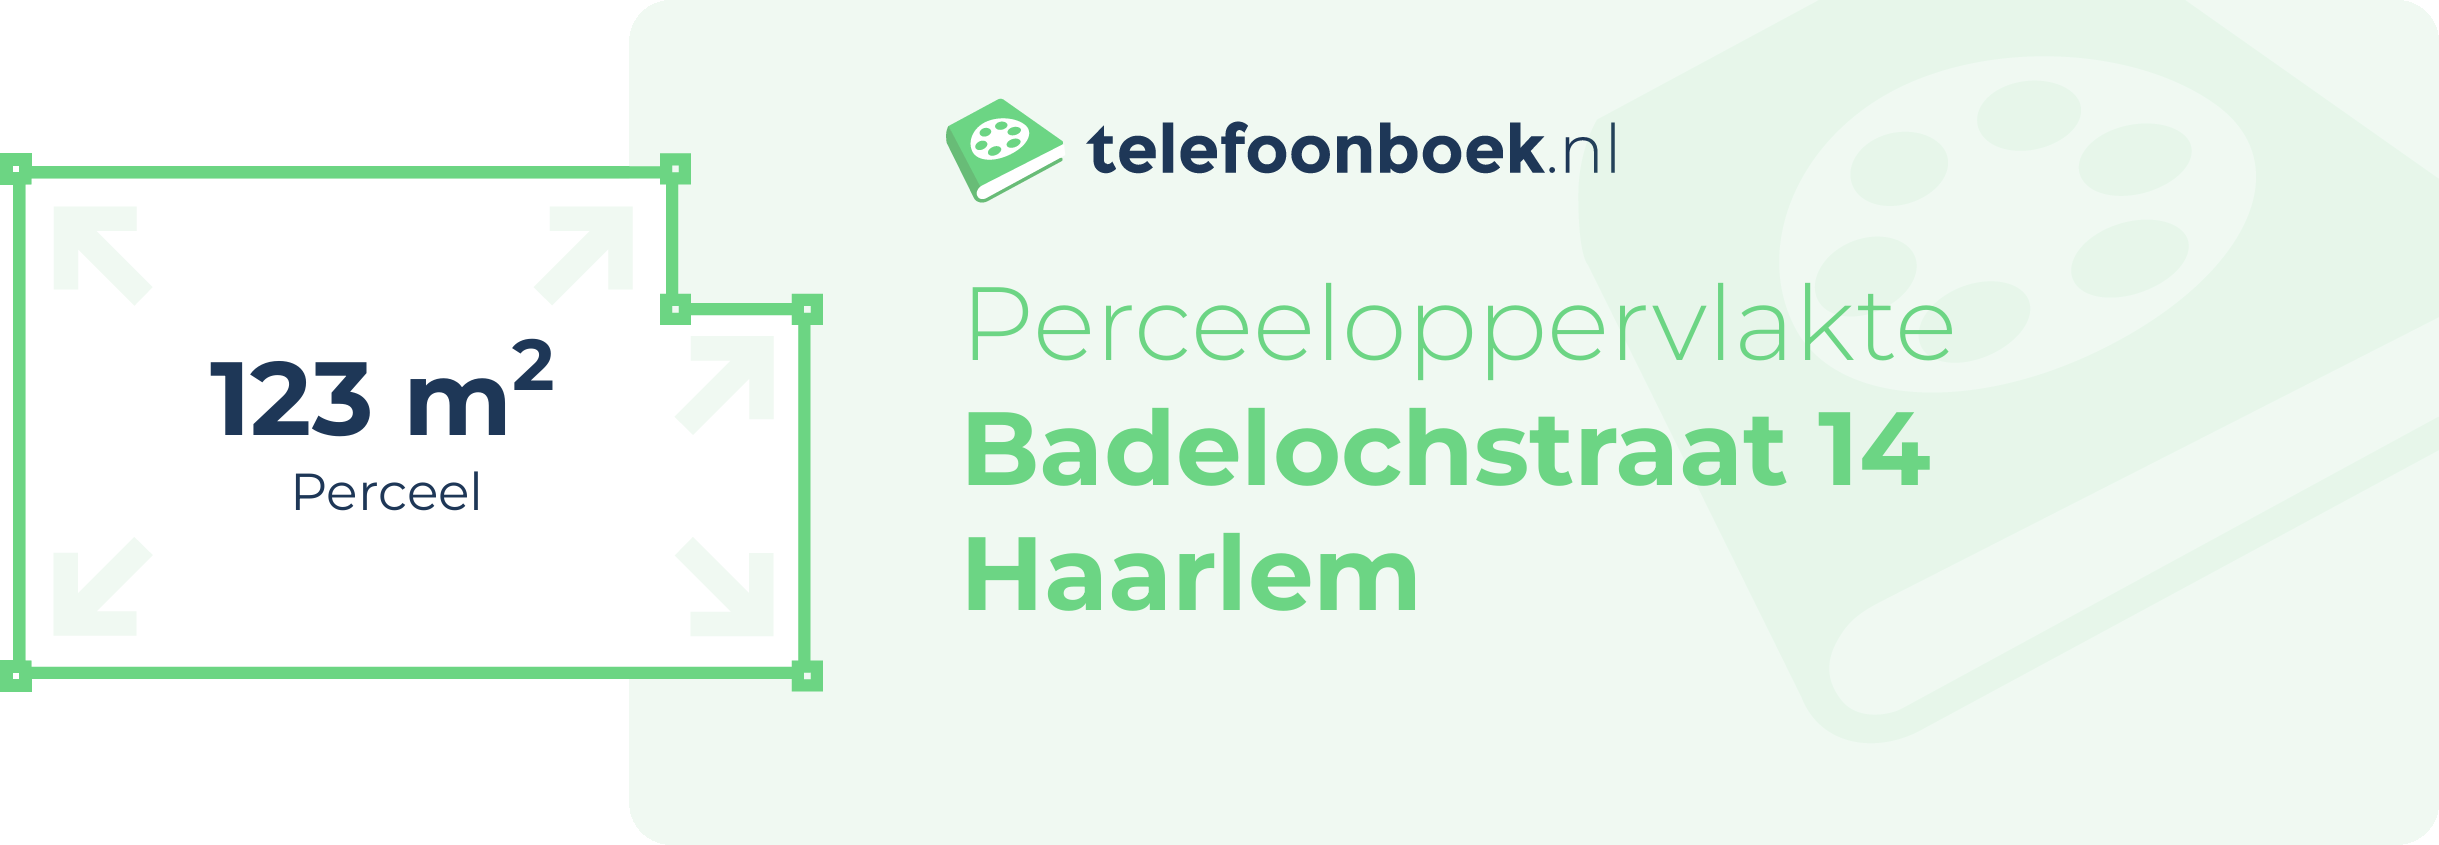 Perceeloppervlakte Badelochstraat 14 Haarlem